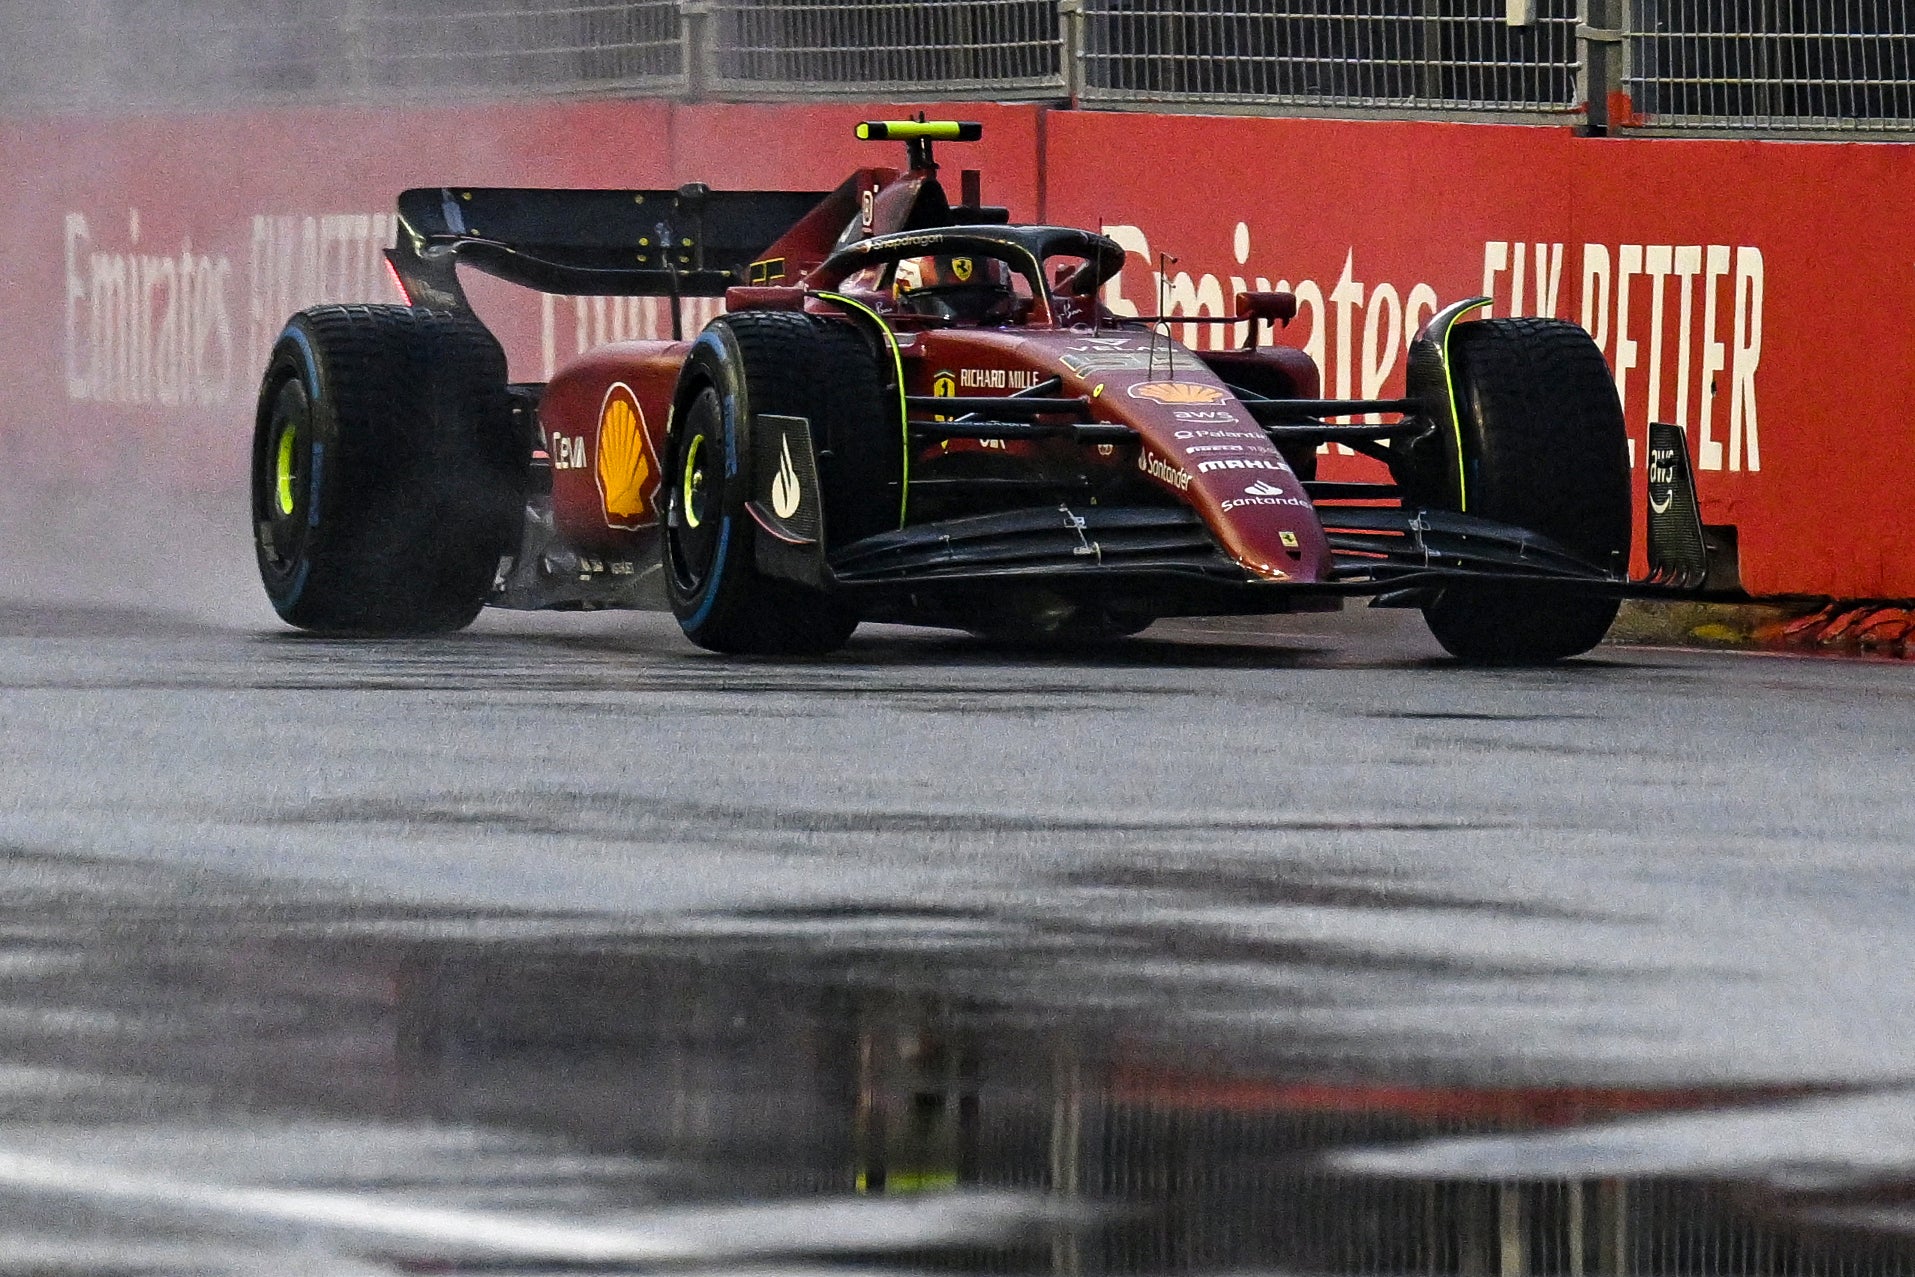 Carlos Sainz finished third at the Singapore Grand Prix